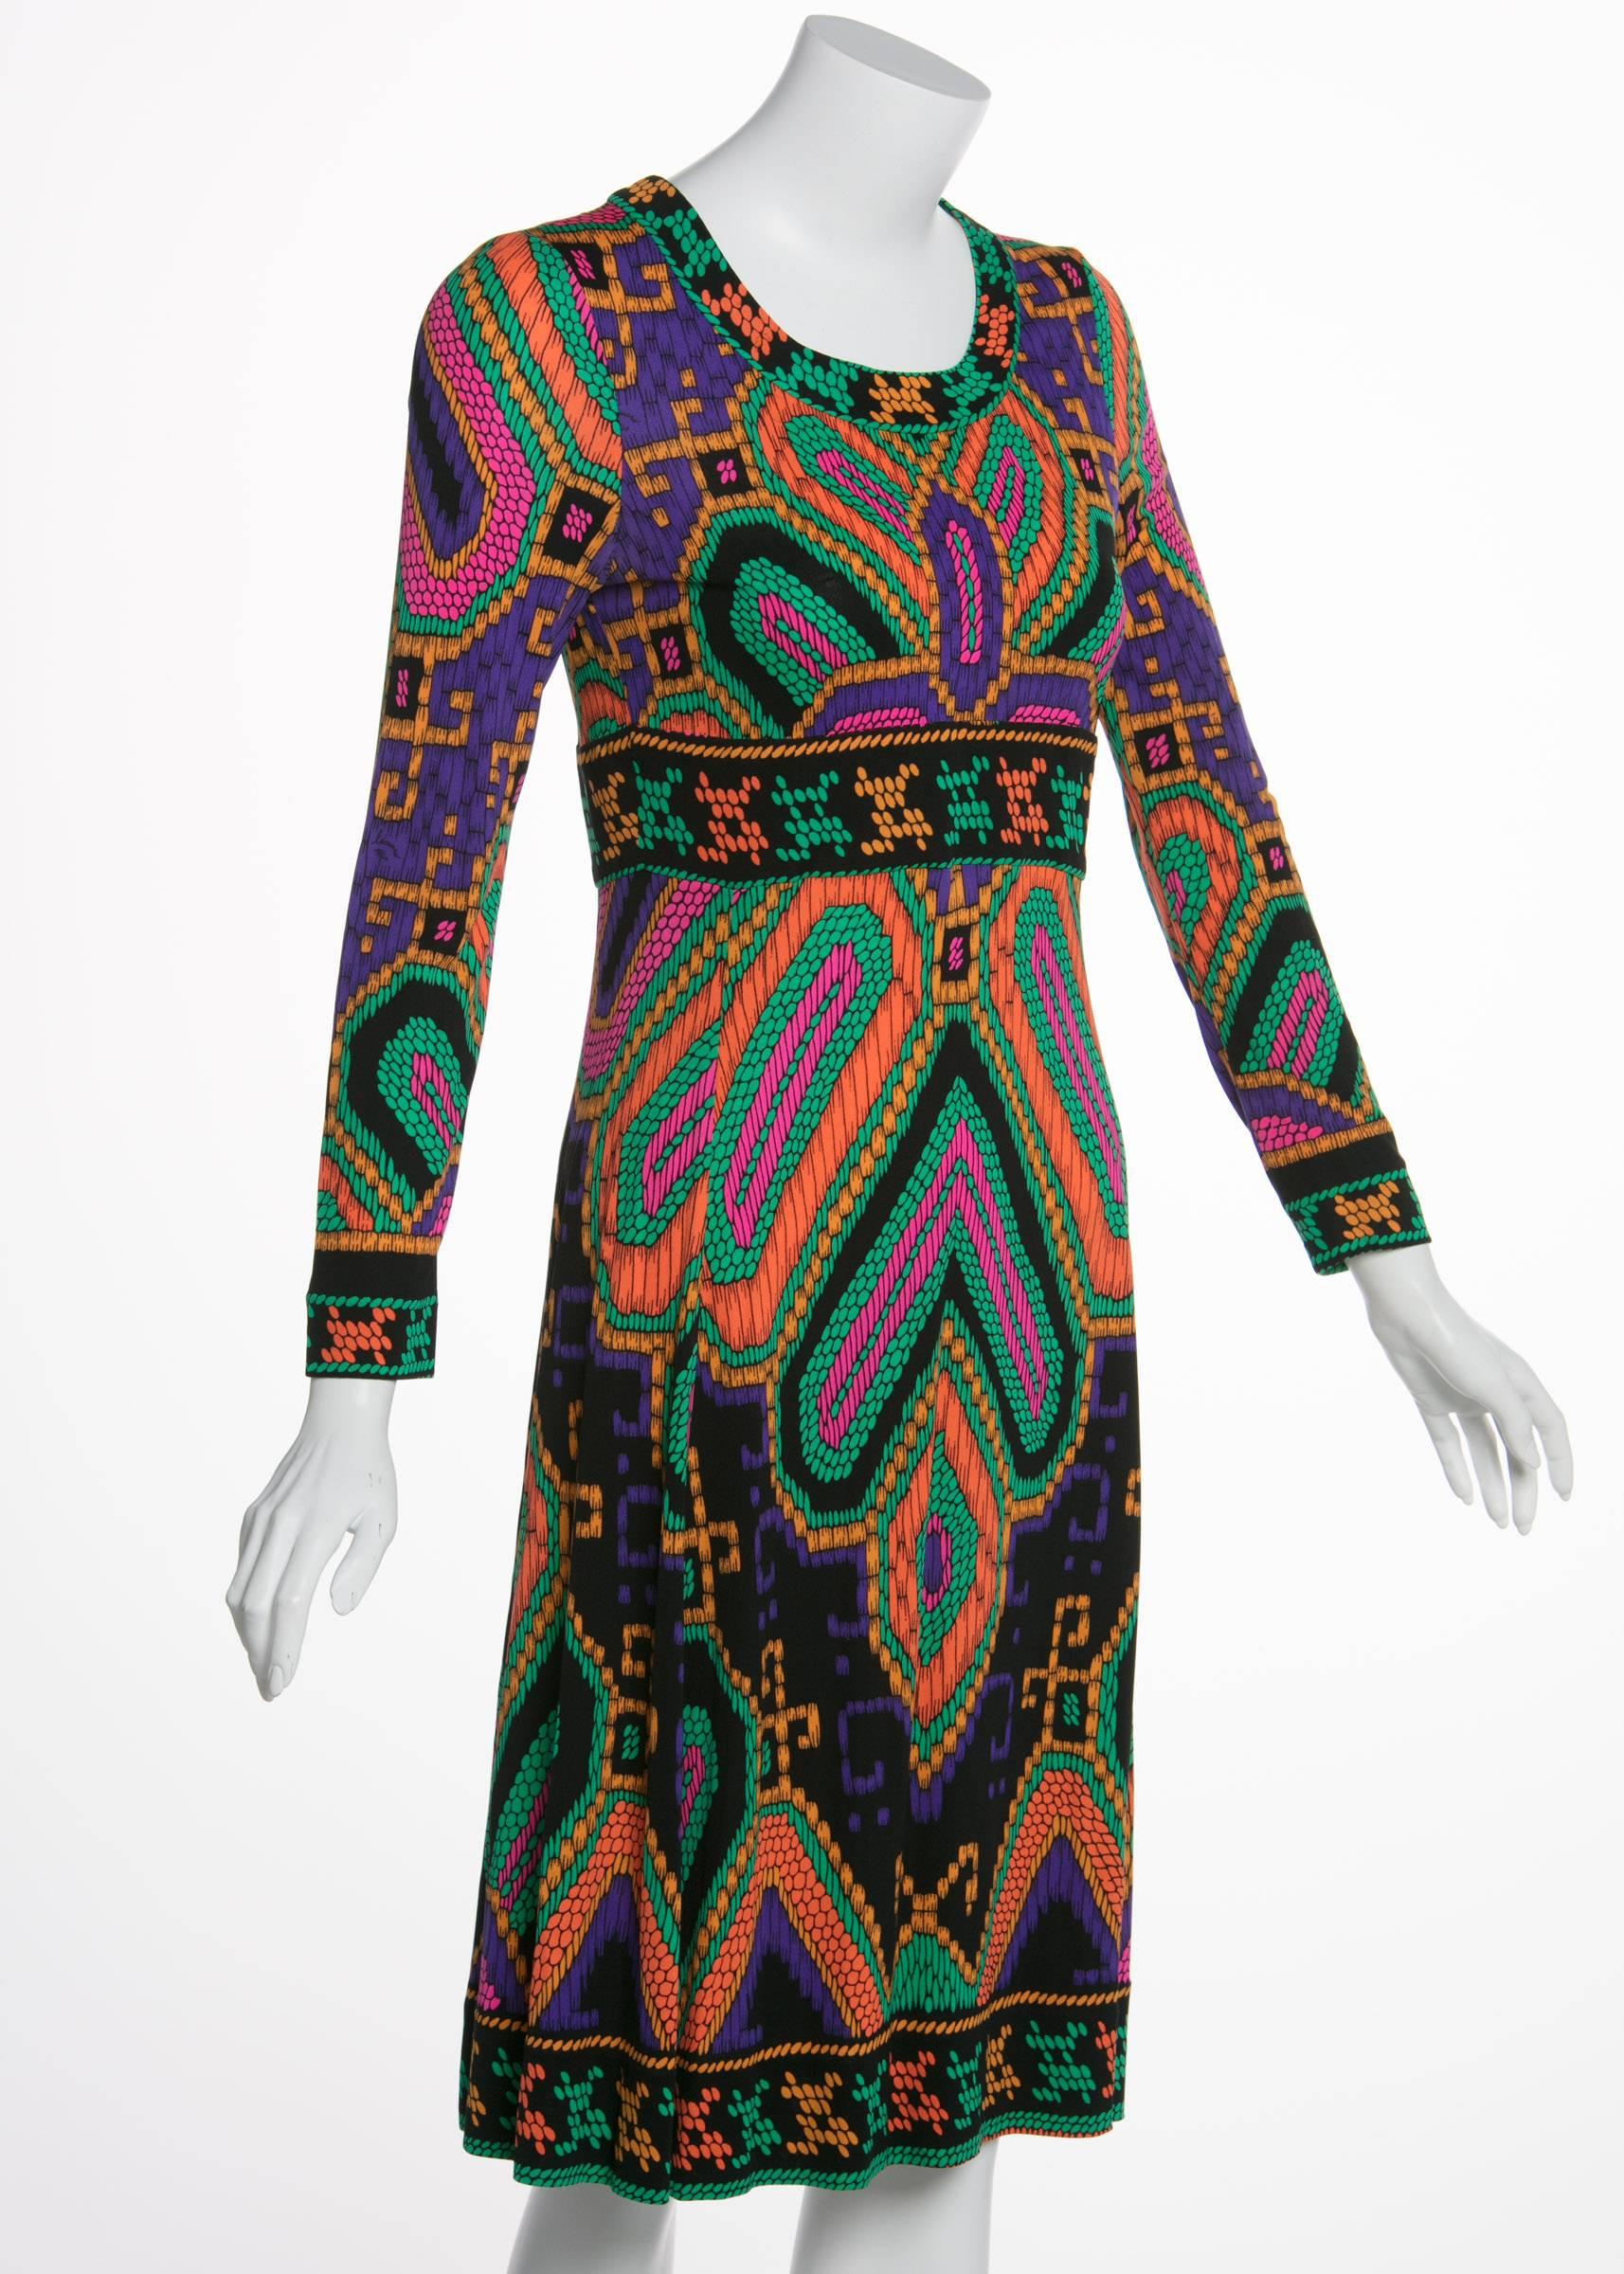 Black Leonard Paris Silk Jersey Print Dress Documented 1970s 